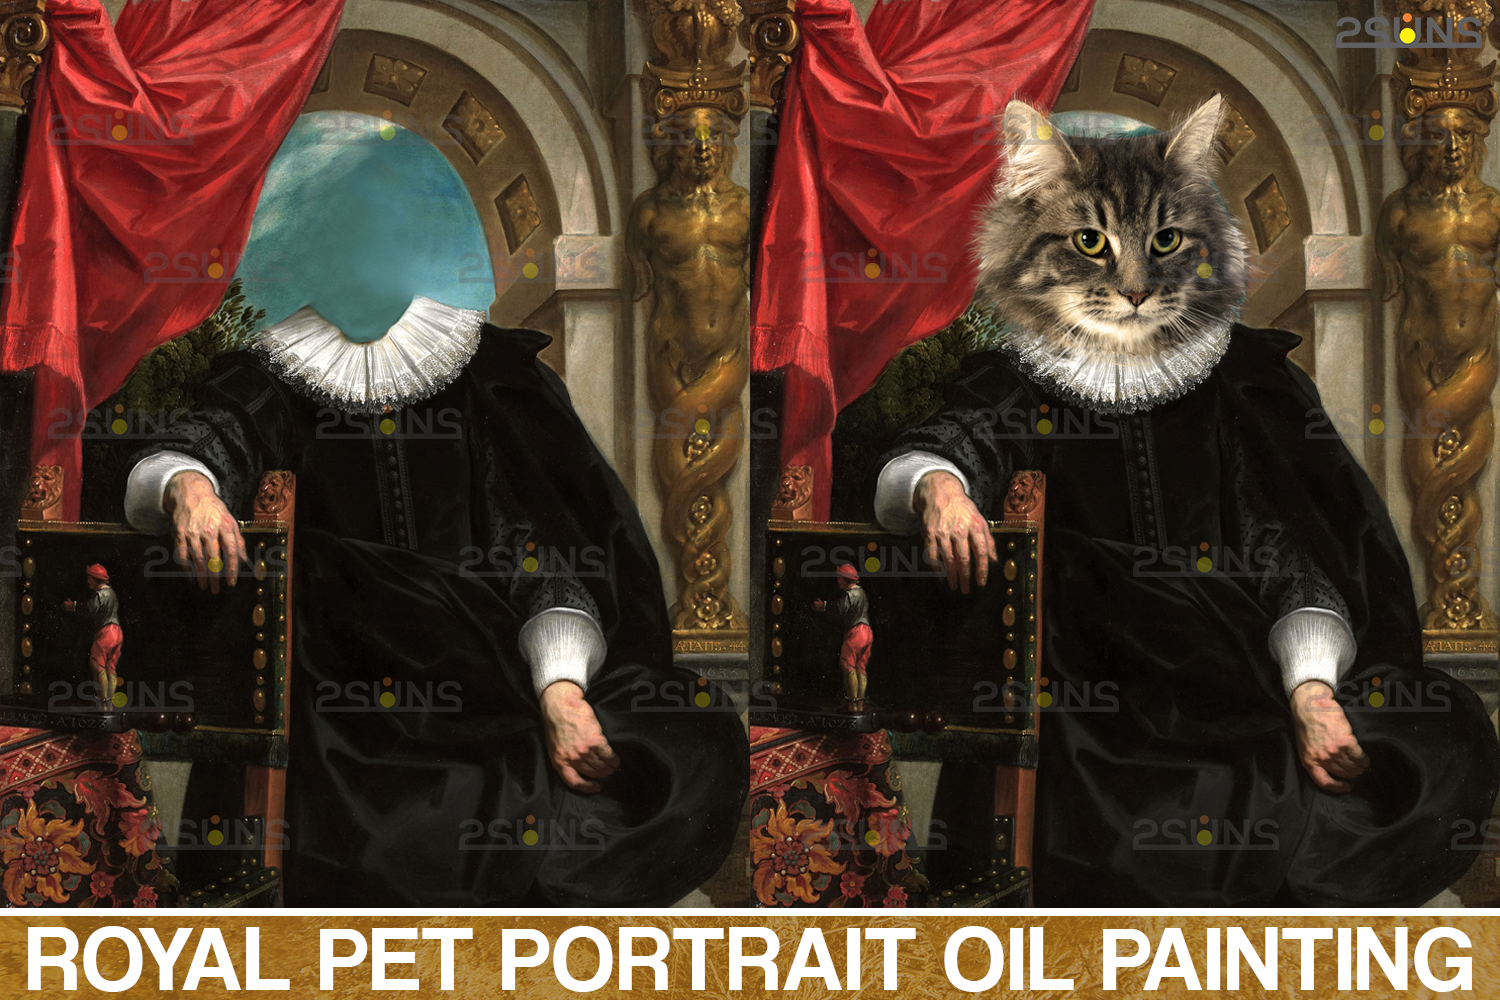 Royal Pet Portrait templates vol 7 Pet Painting By 2SUNS TheHungryJPEG